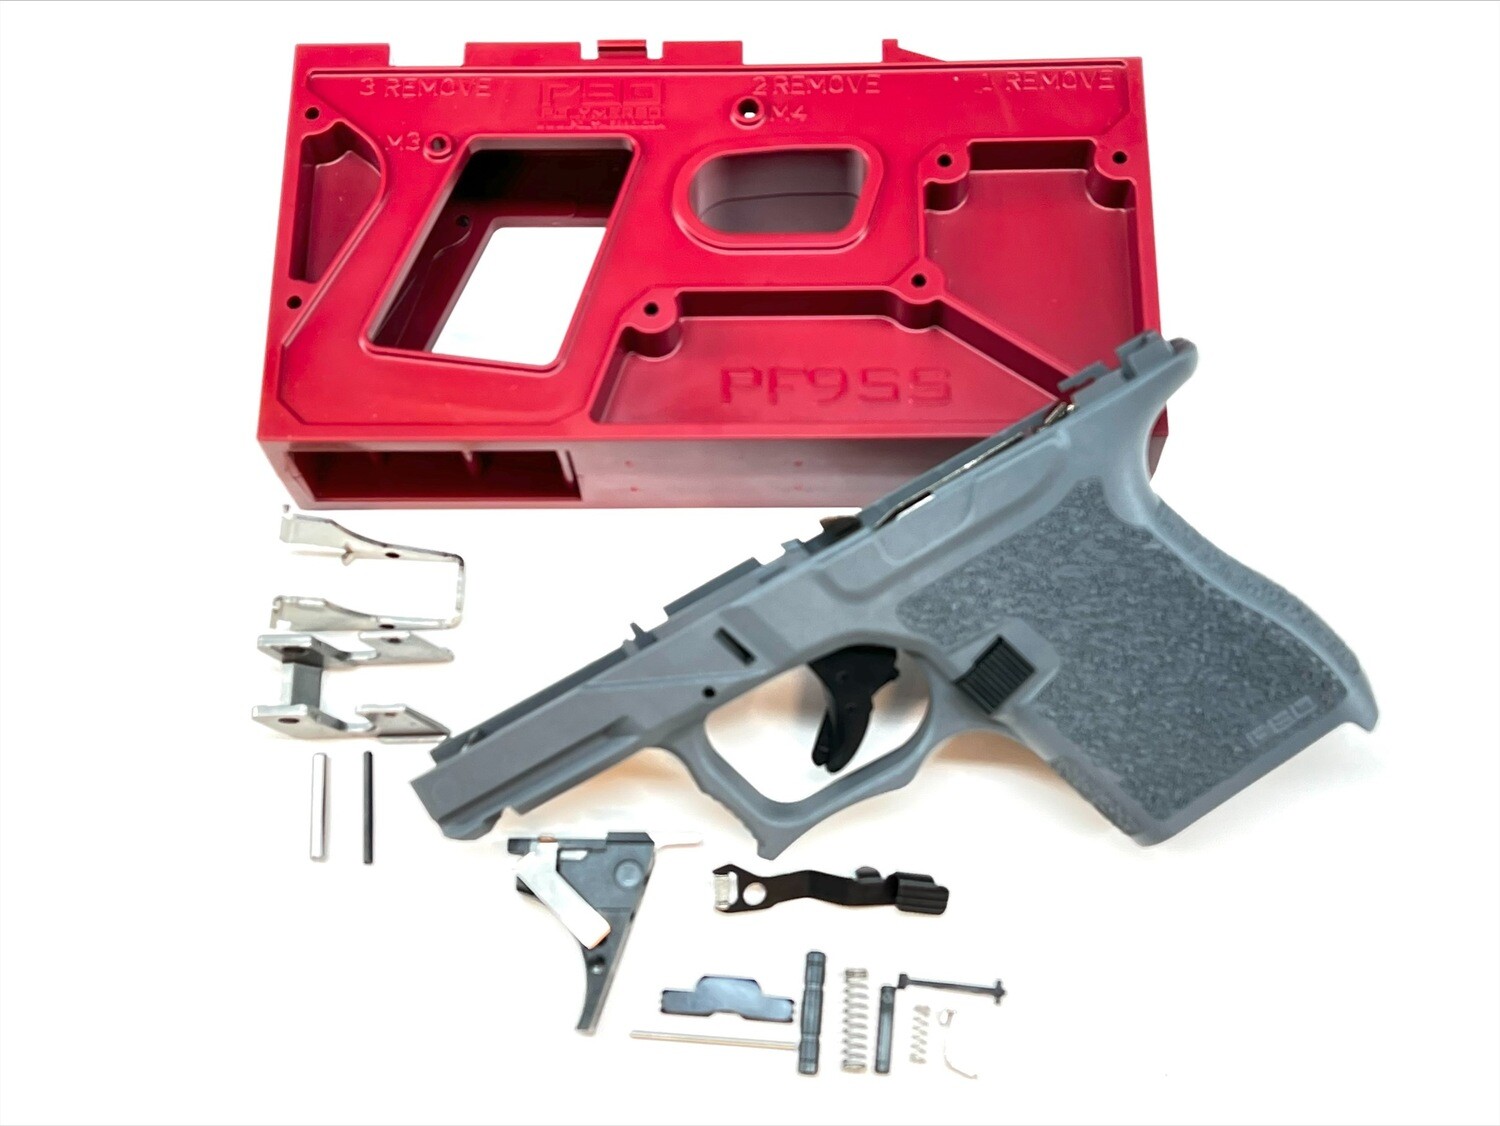 Polymer80 PF9SS-GRY PF9SS 80% Single Stack Pistol Frame Kit Gray Polymer for Glock 43 Gen4 - Free Lower Parts Kit